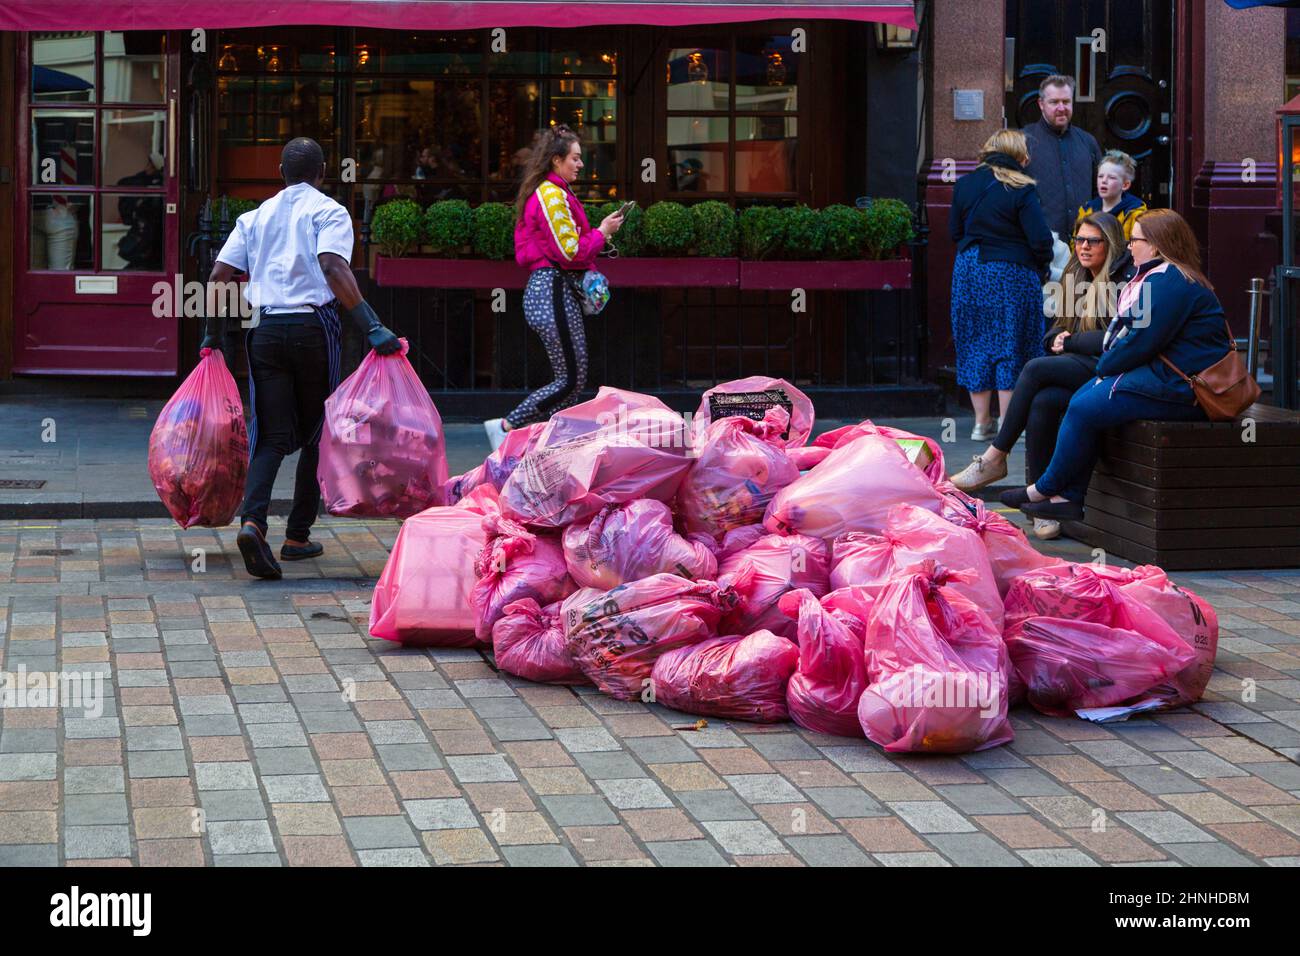 Bin bags left on the of a london street, uk Stock Photo